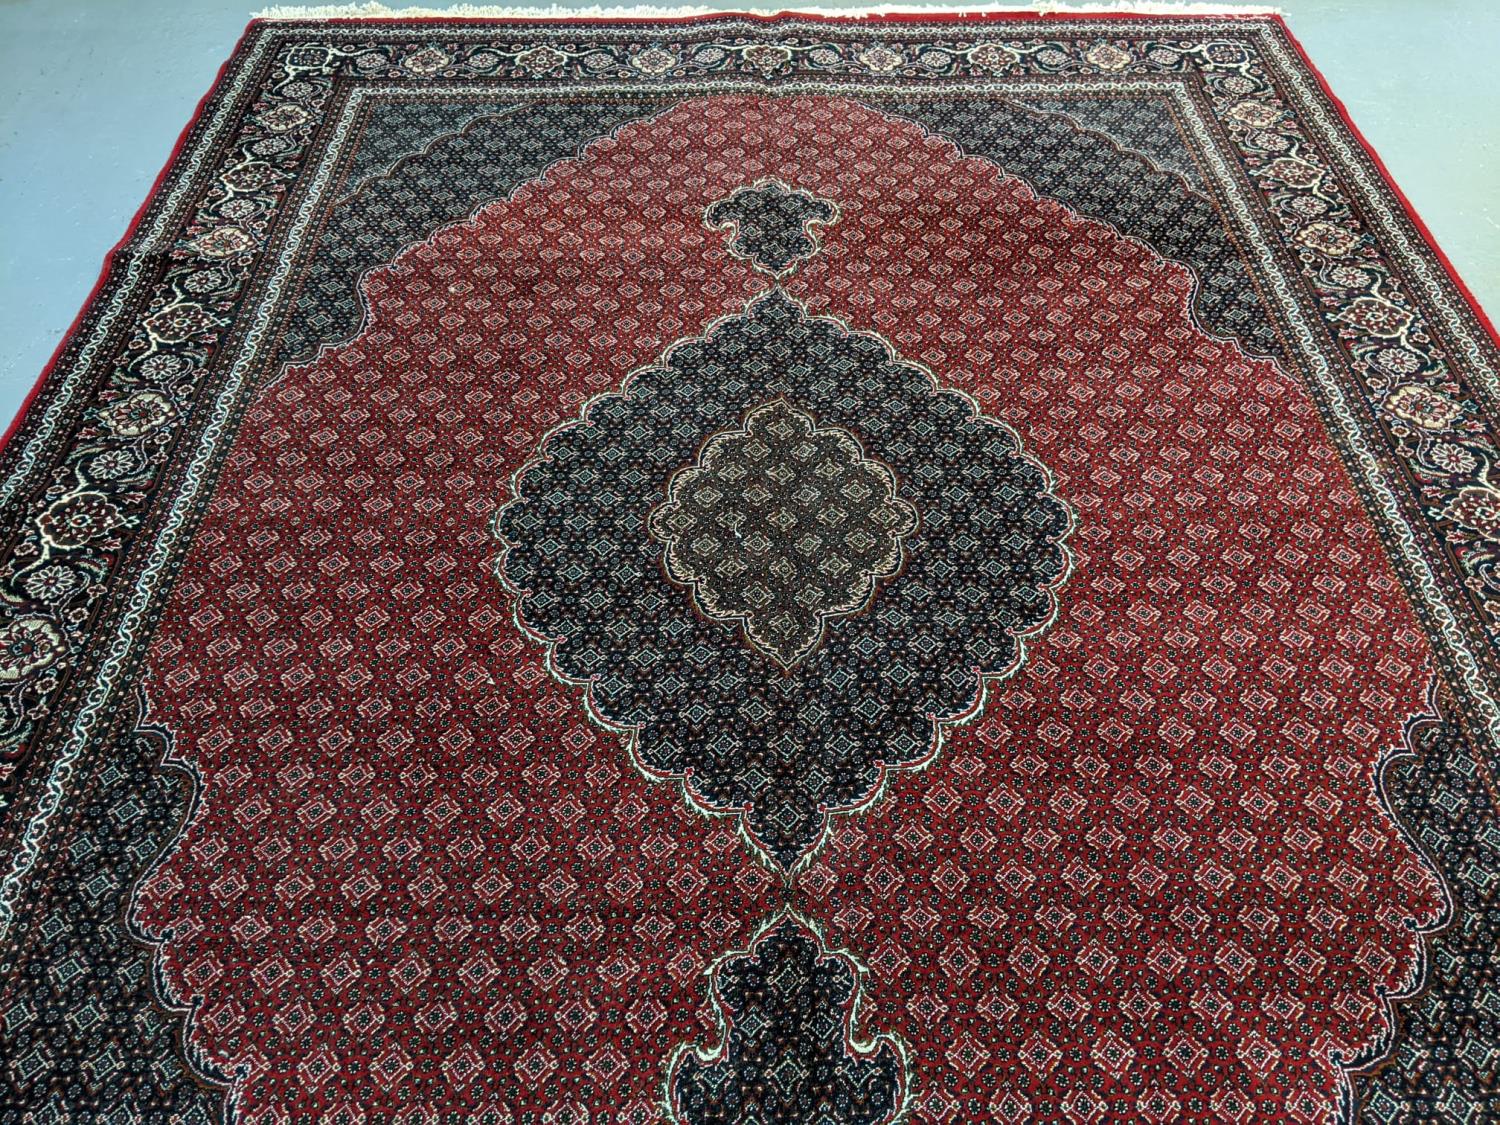 Rich red ground full pile Iranian carpet of Persian Kashan design. (B.P. 21% + VAT) - Image 2 of 5